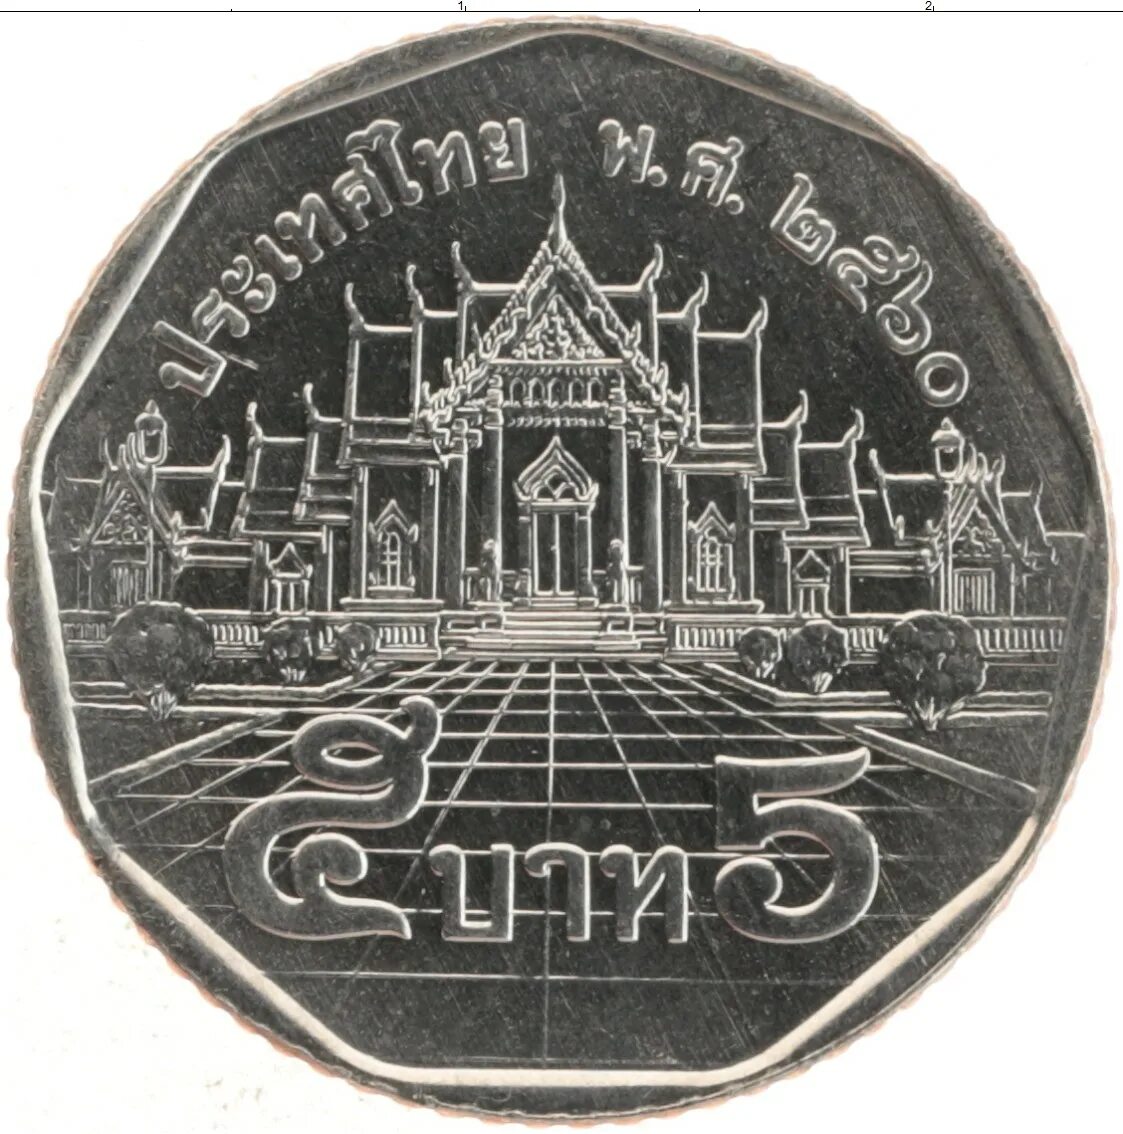 Монеты Тайланда 5 бат. Таиландская монета 5 бат. Тацландские монеты 5 бат. Таиланд 5 бат 2007.